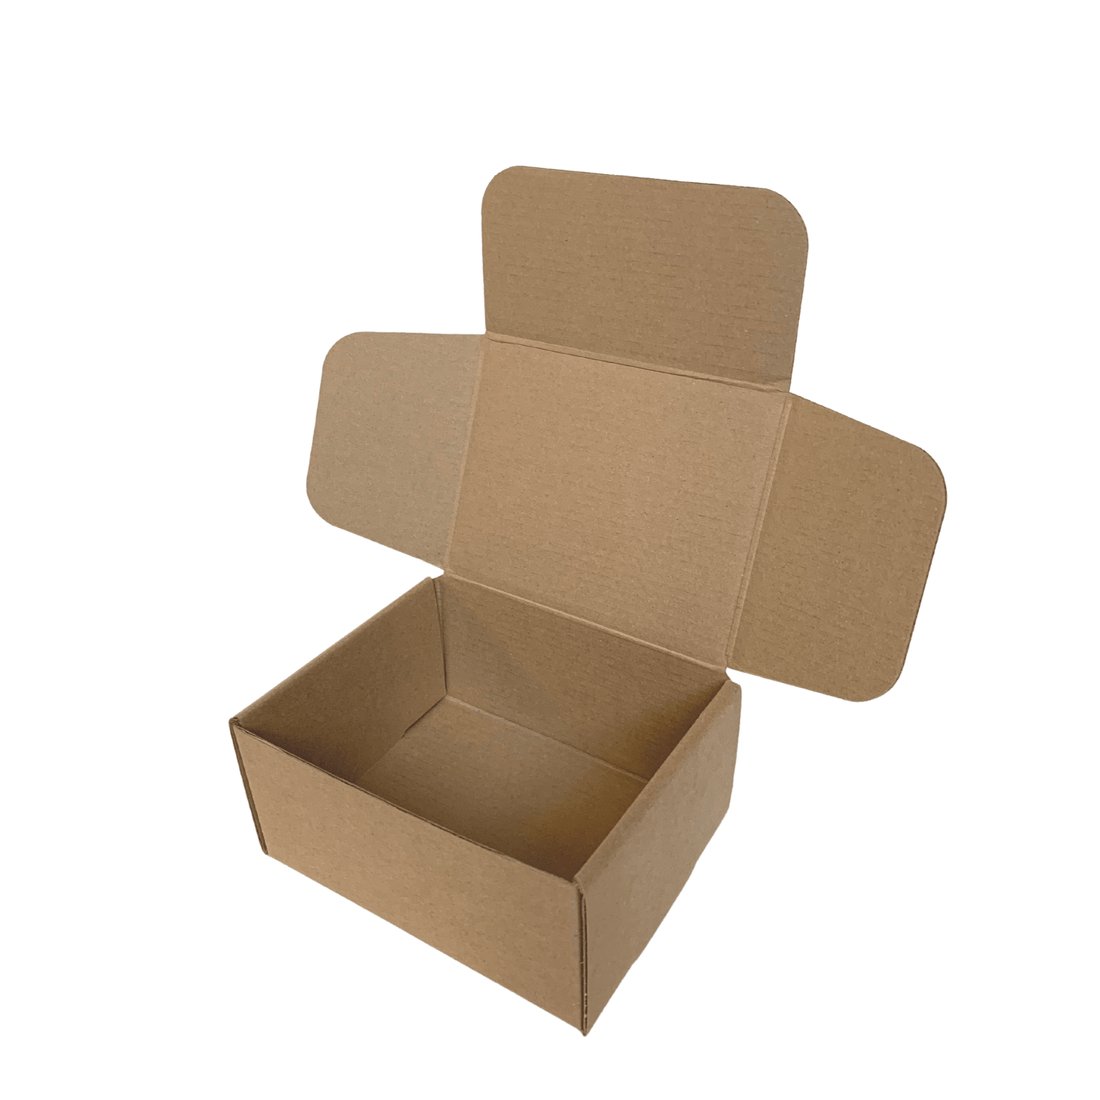 Small Shipper Box Kraft - Happy Box